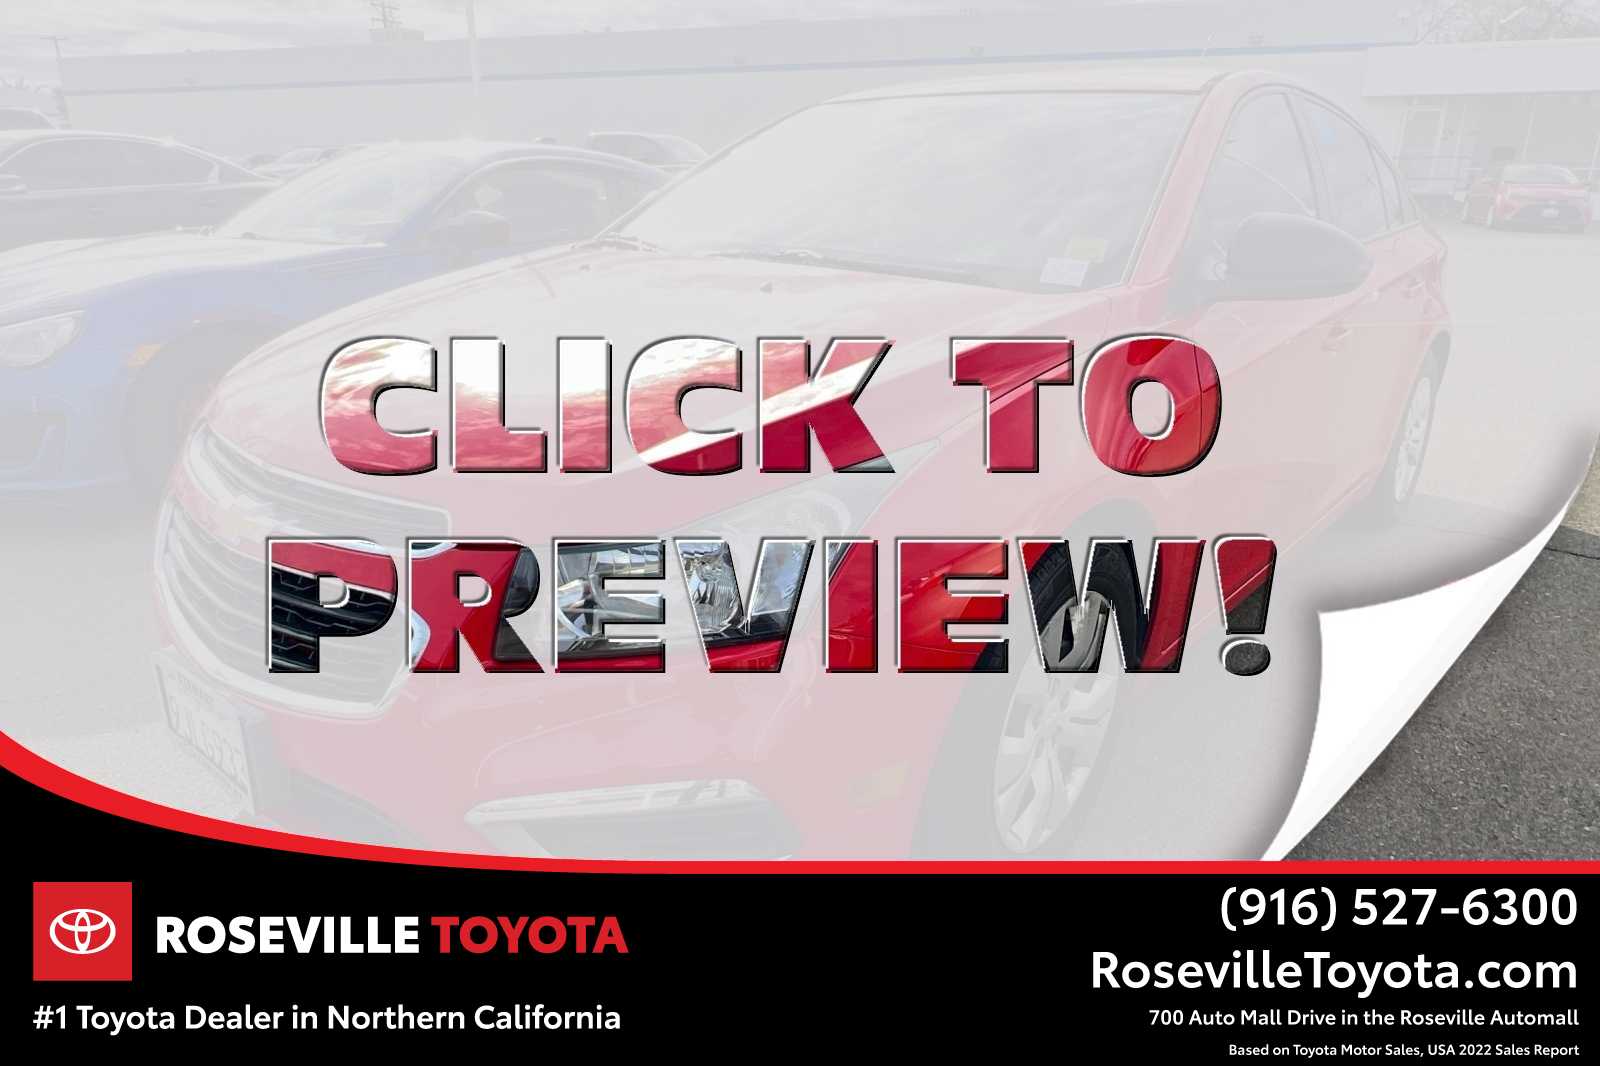 2016 Chevrolet Cruze Limited -
                Roseville, CA